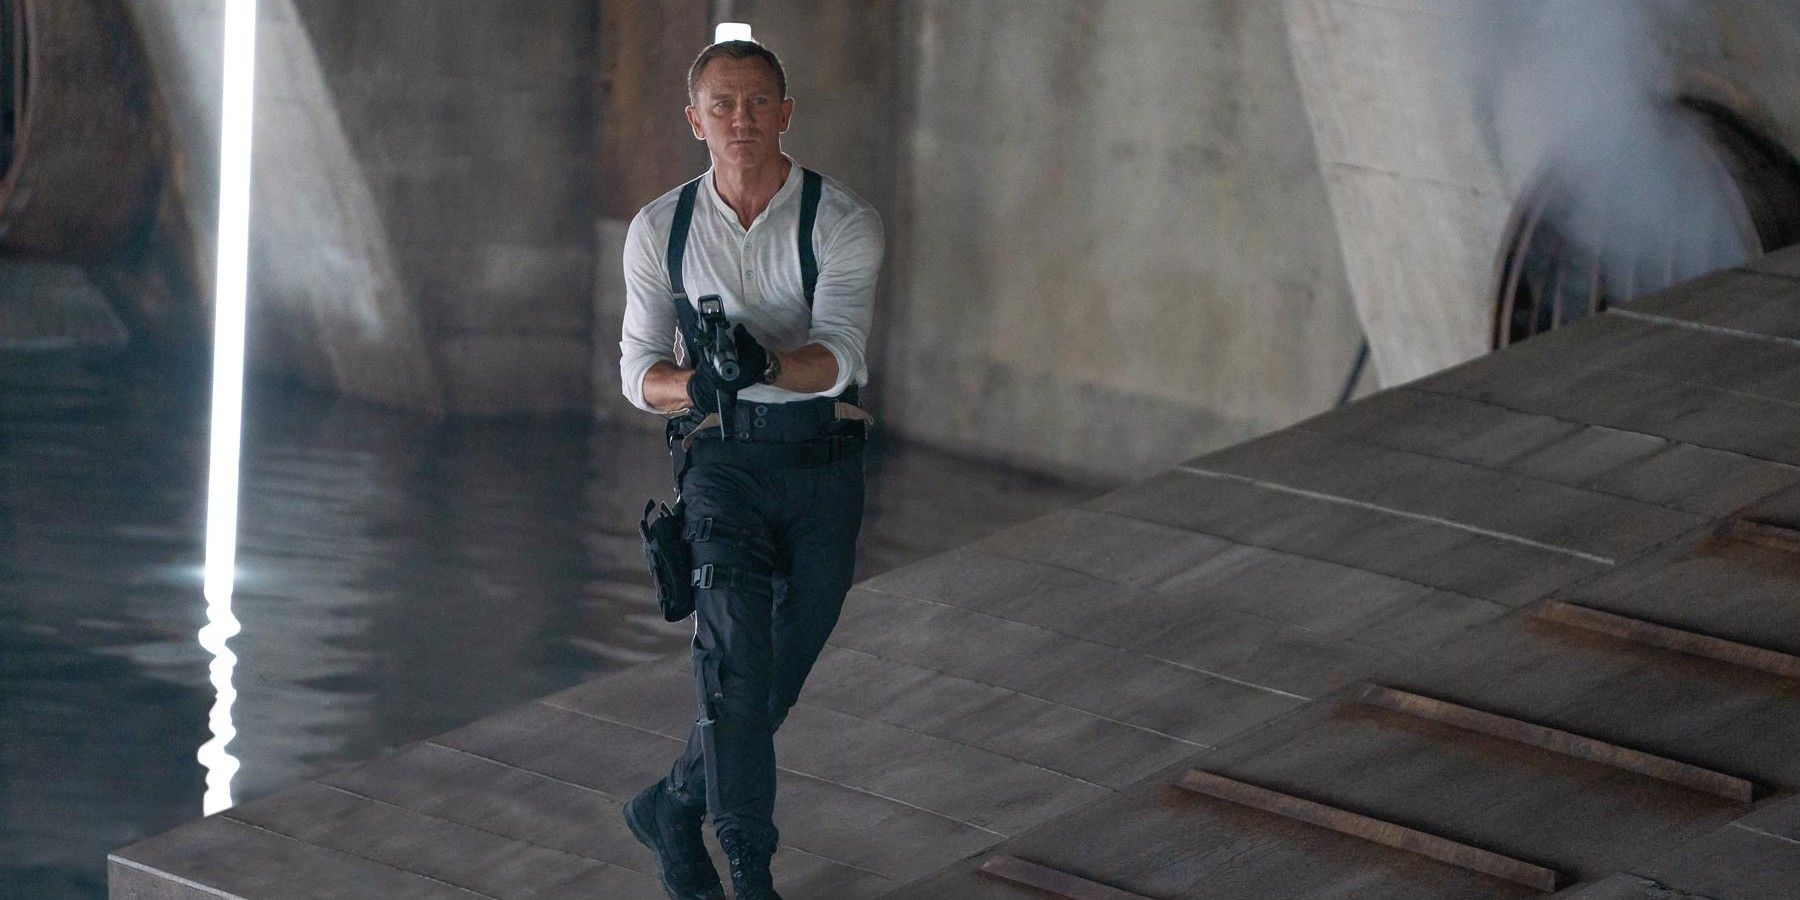 James Bond shoots a gun in No Time To Die